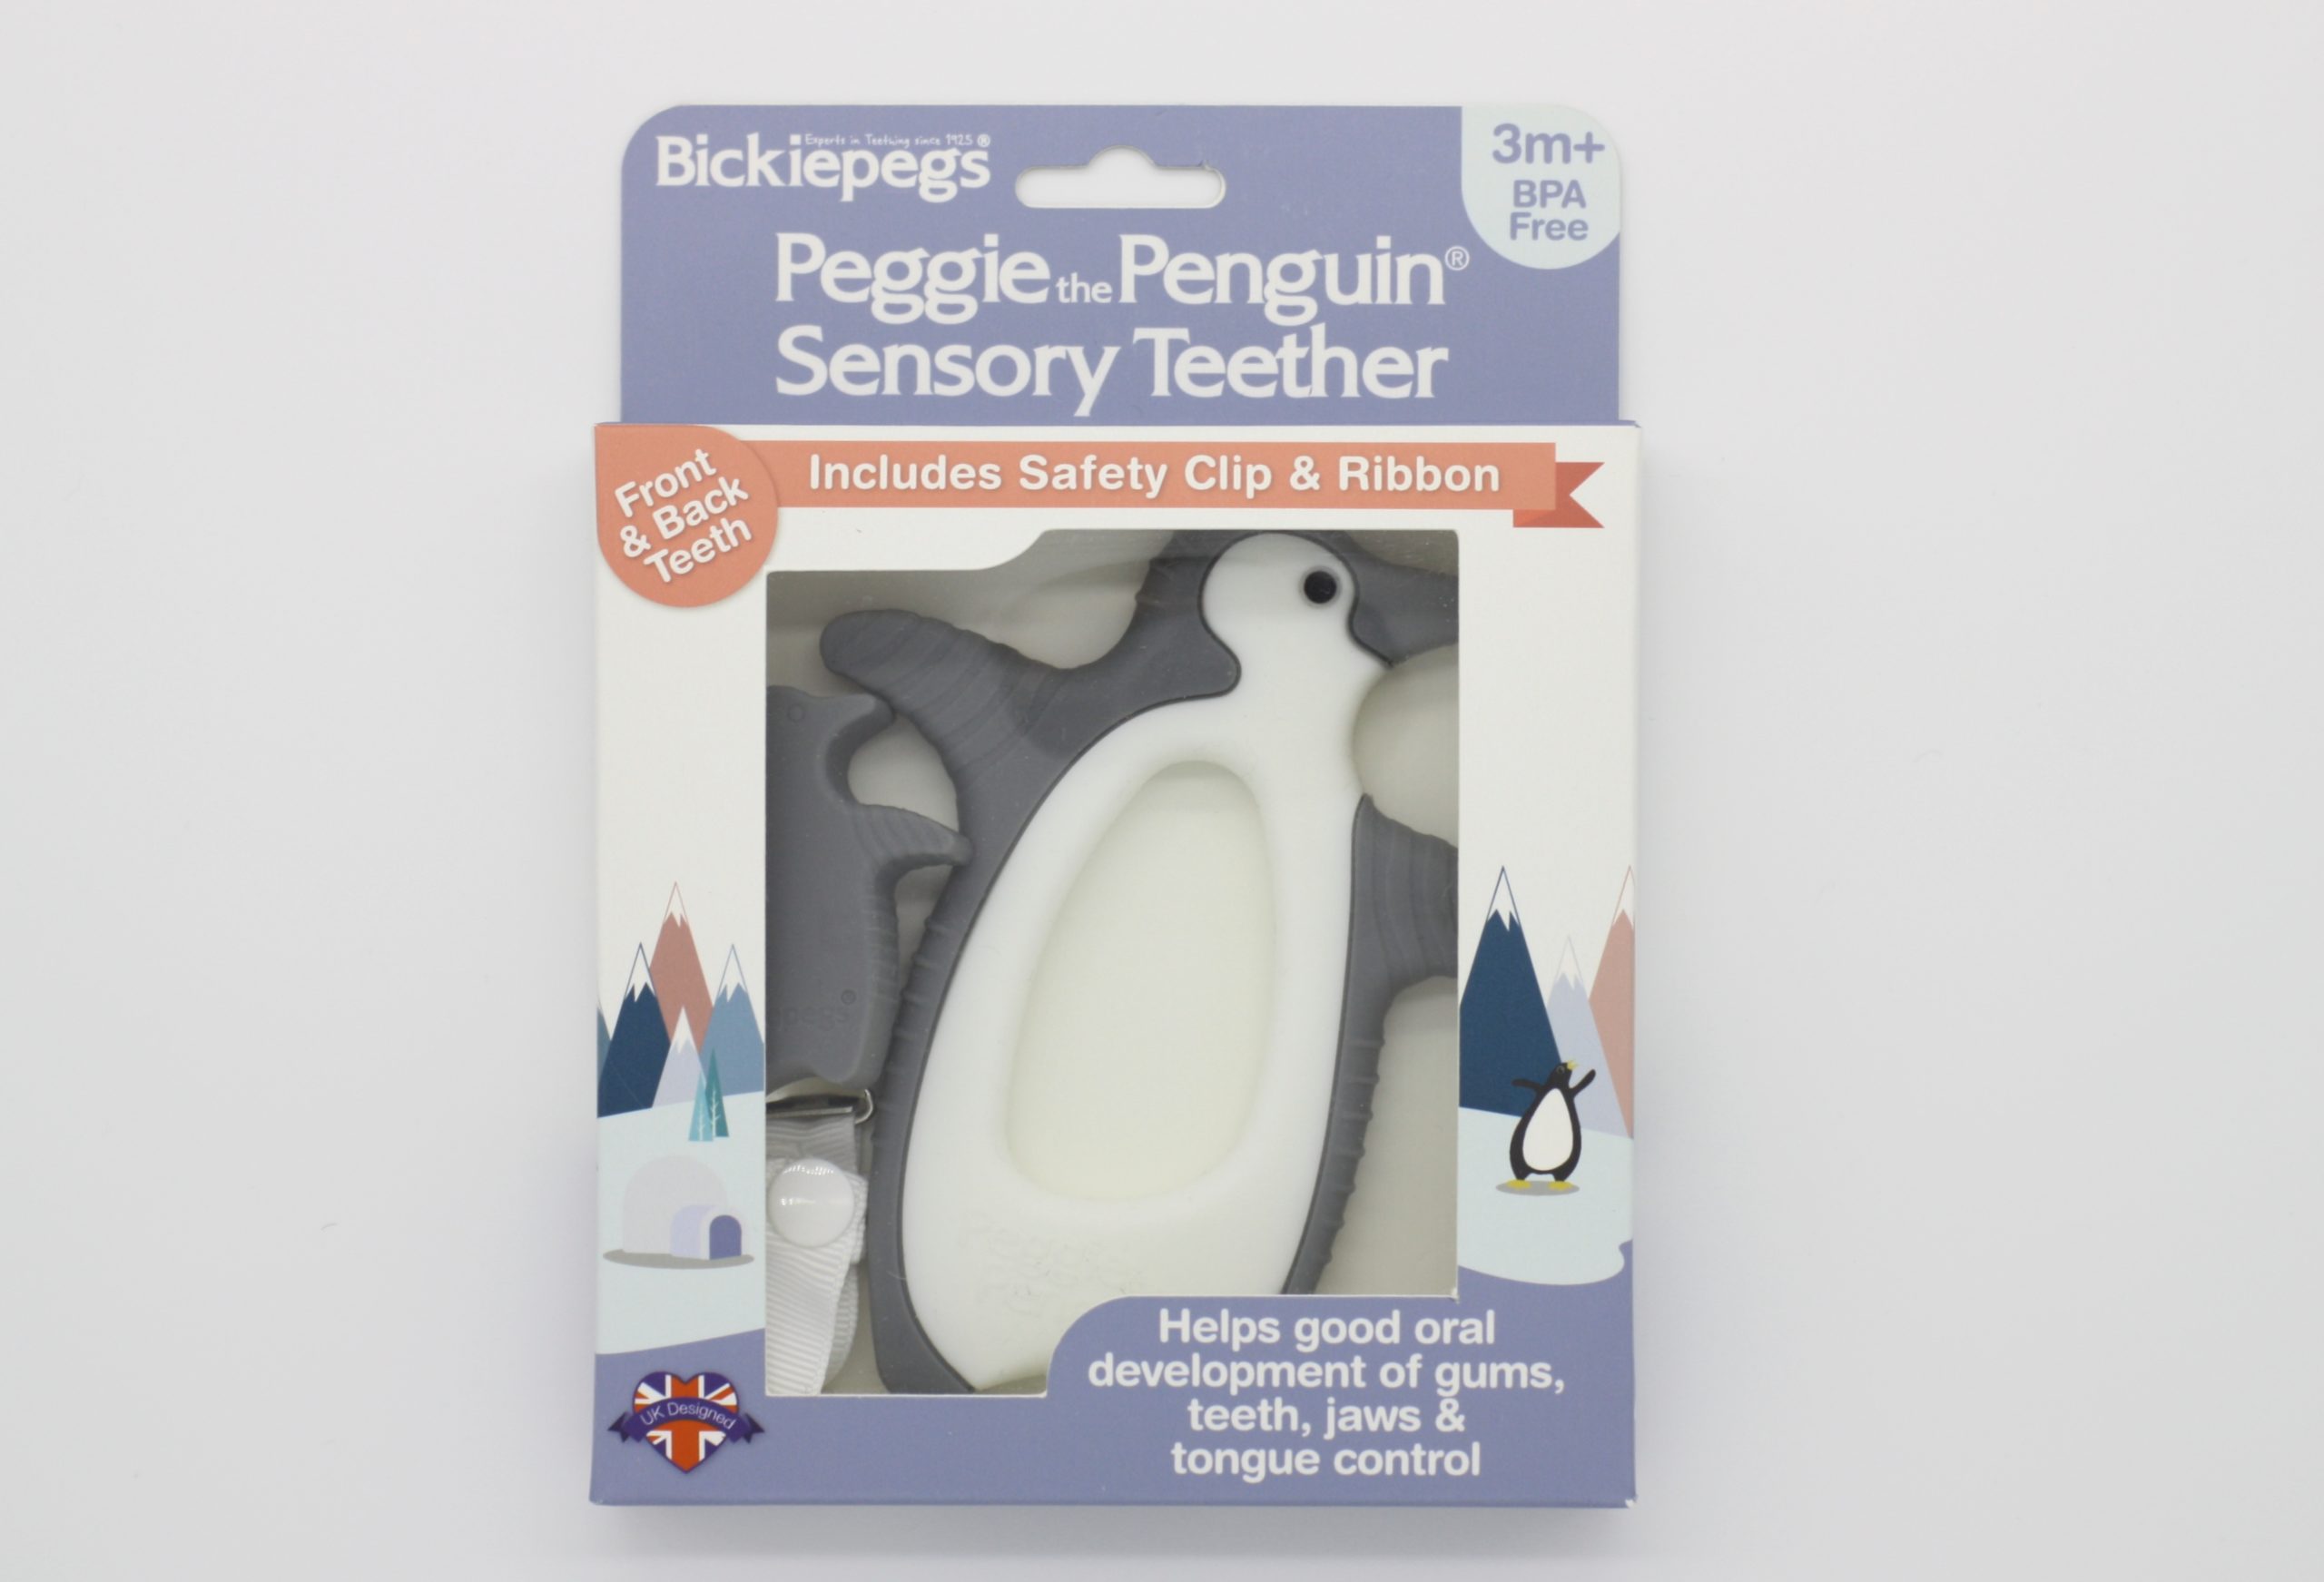 Bickiepegs Peggie the Penguin sensory teether